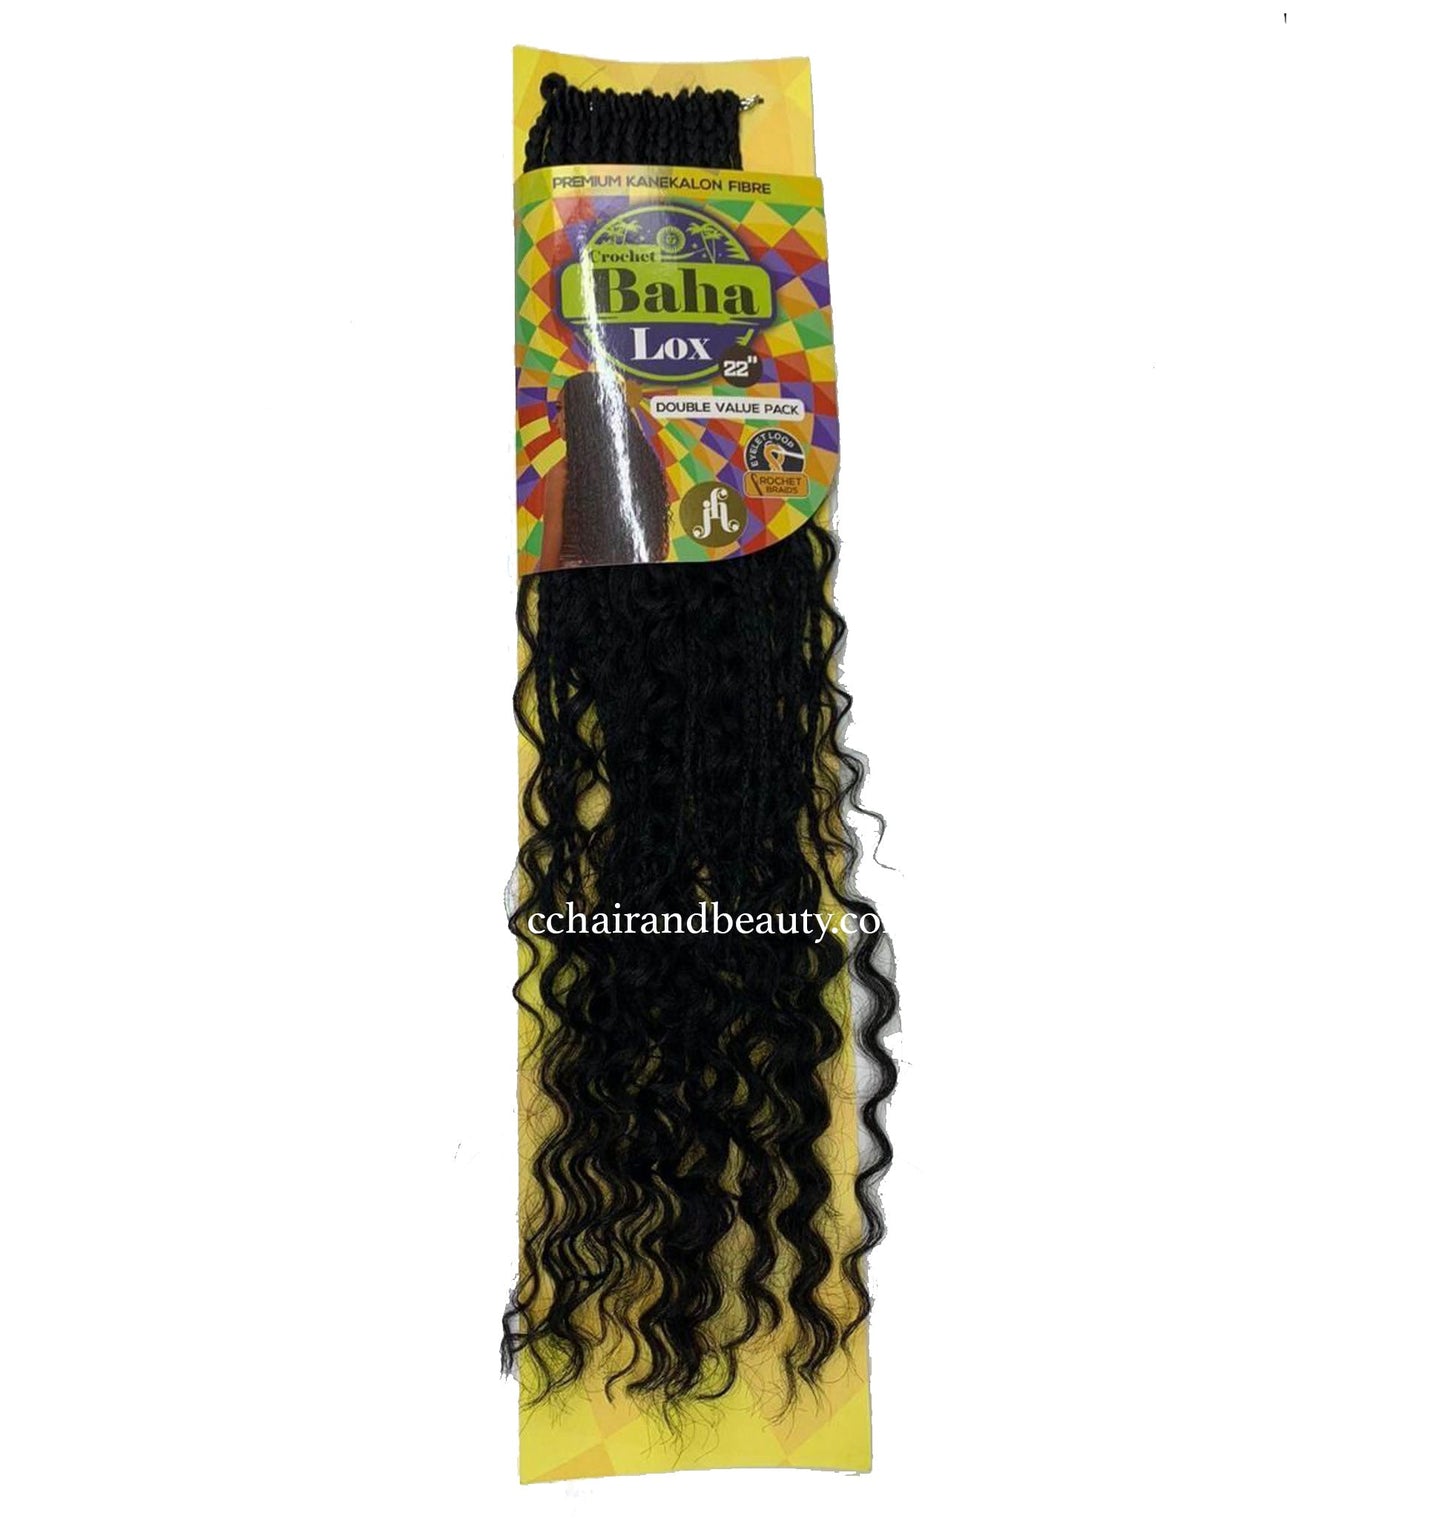 Jazzy Hair Crochet Braid Baha Lox Twist in 20"